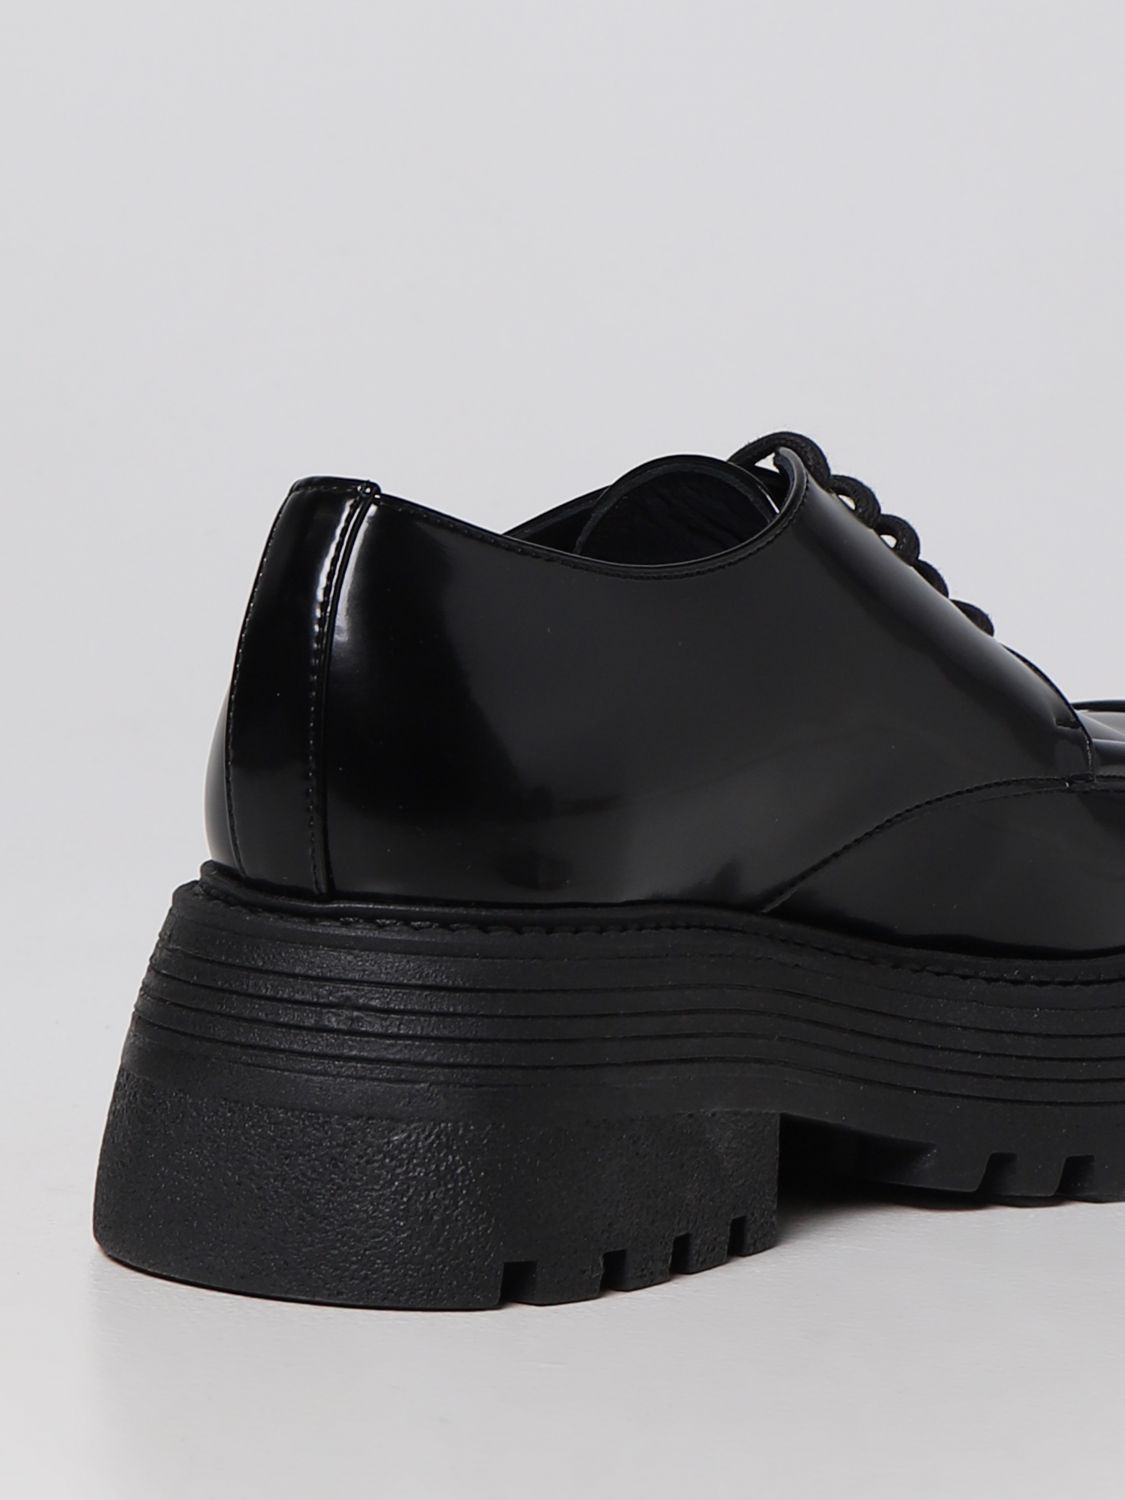 Chiara Ferragni Outlet: oxford shoes for woman - Black | Chiara Ferragni  oxford shoes CF3033 online on 